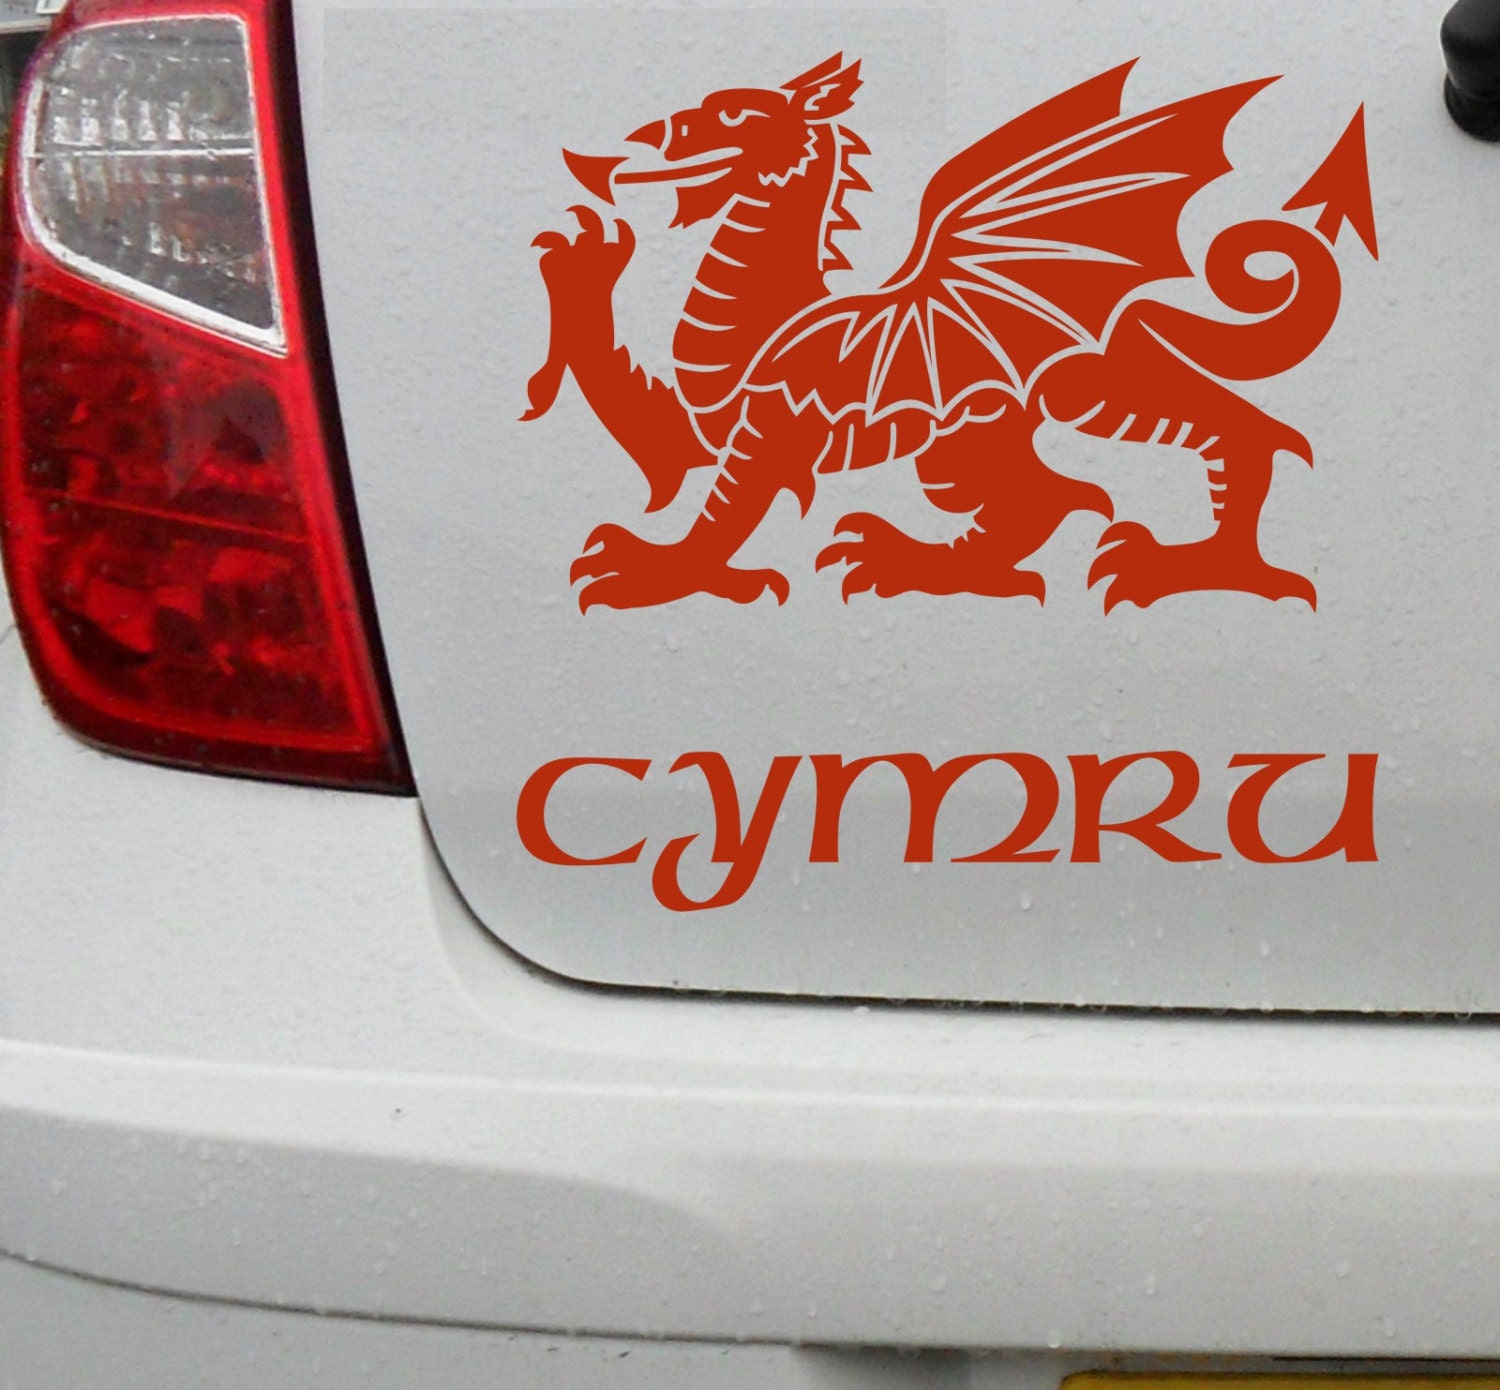 2 x small Welsh red dragon car bumper stickers 14 x 9 cm decal van motorbike 